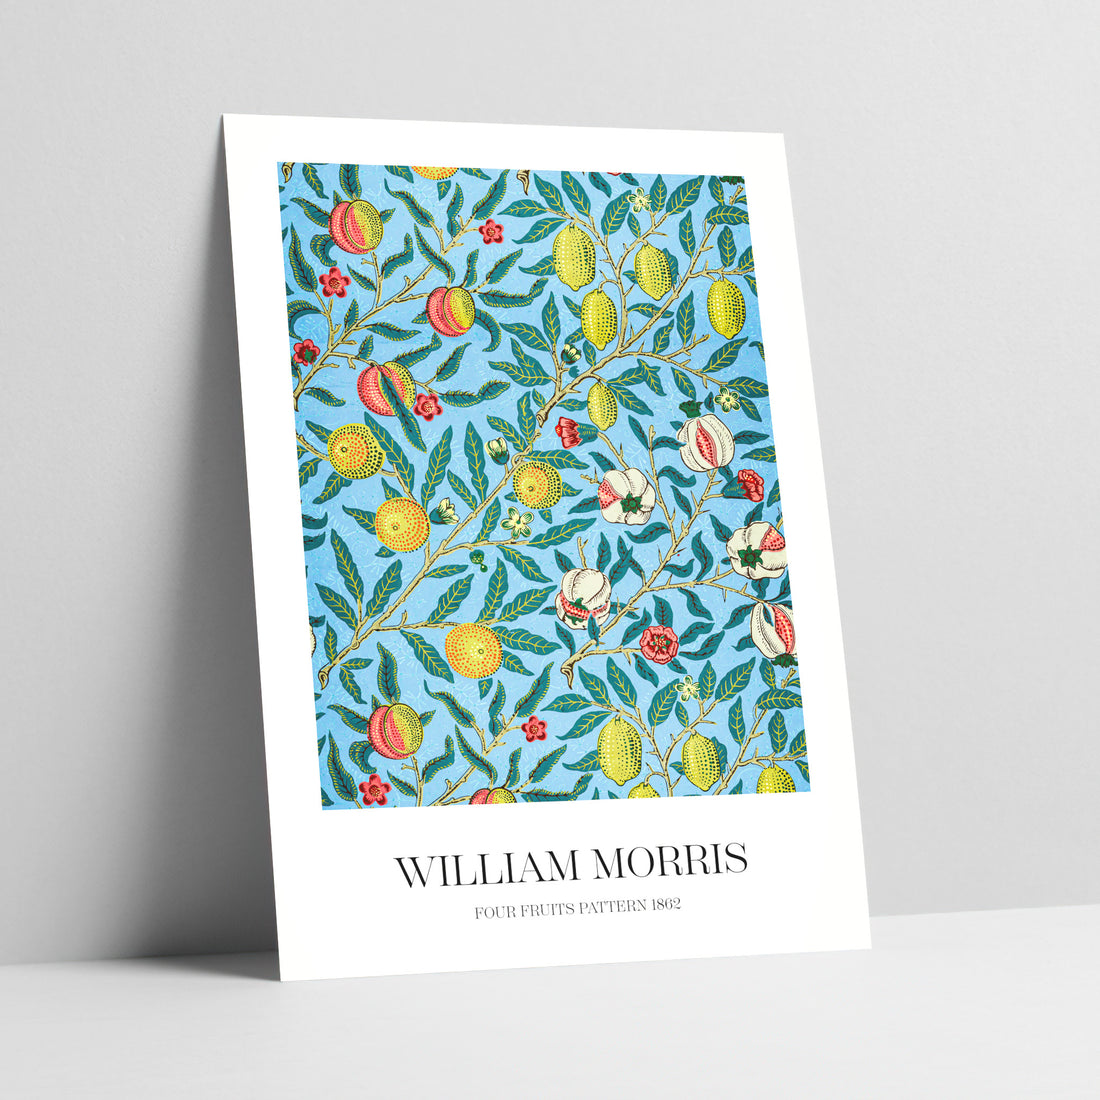 William Morris Four Fruits Gallery Art Print